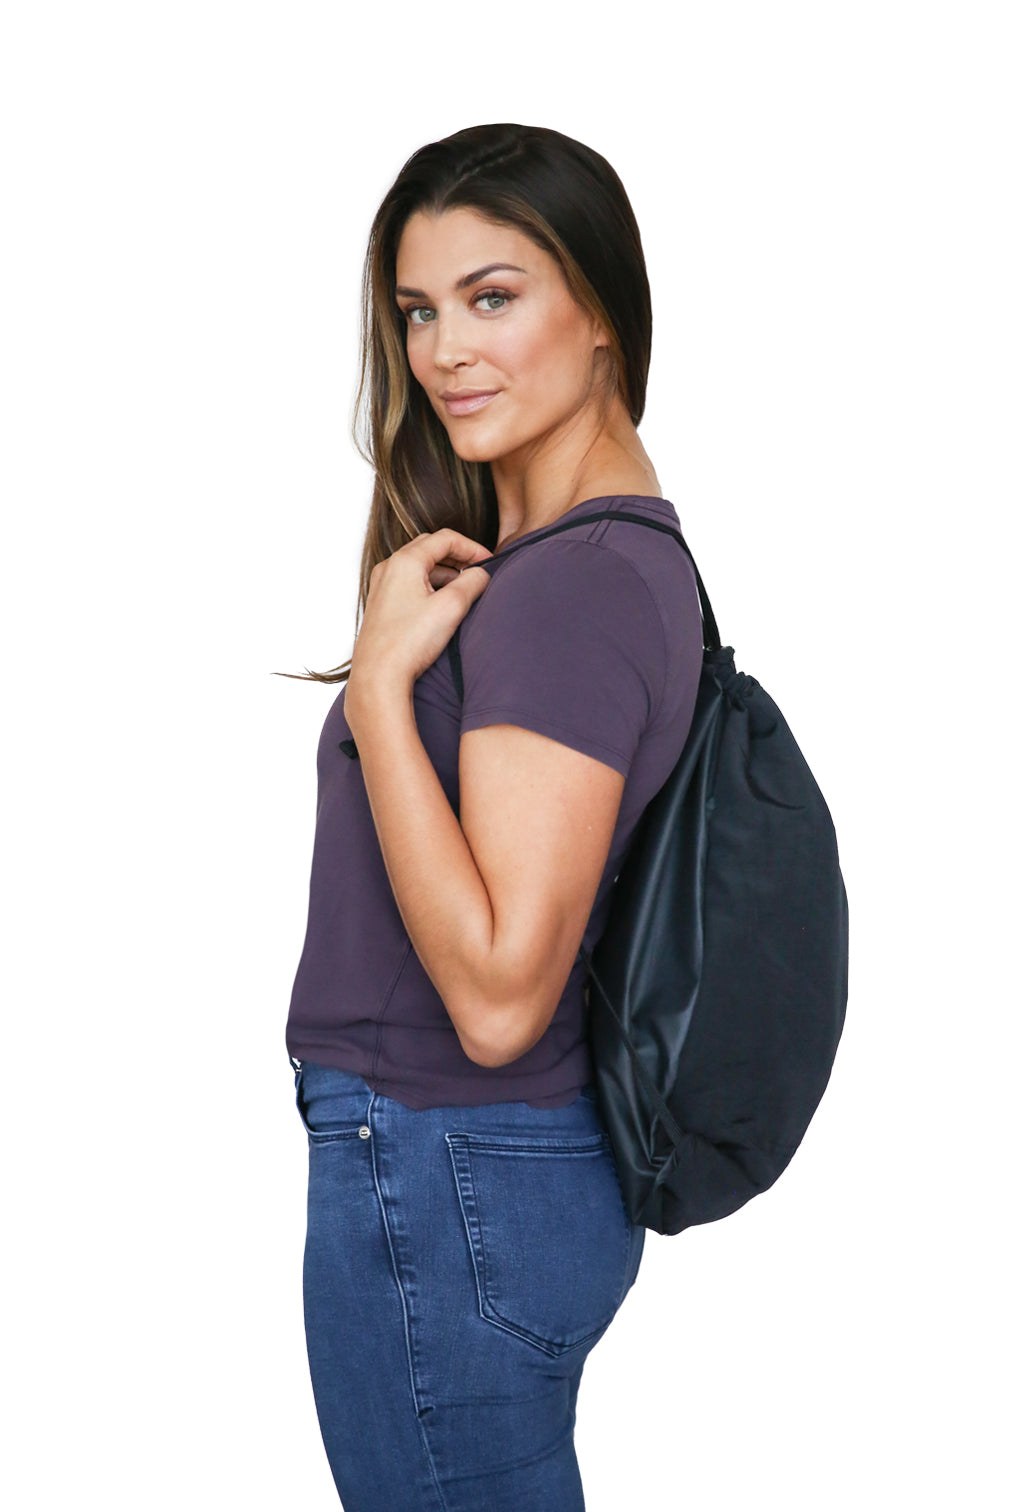 Quikflip Dryflip Rain Jacket 2.0 - Black (2-in-1 Reversible Backpack  Water-Resistant Jacket) - Quikflip Apparel